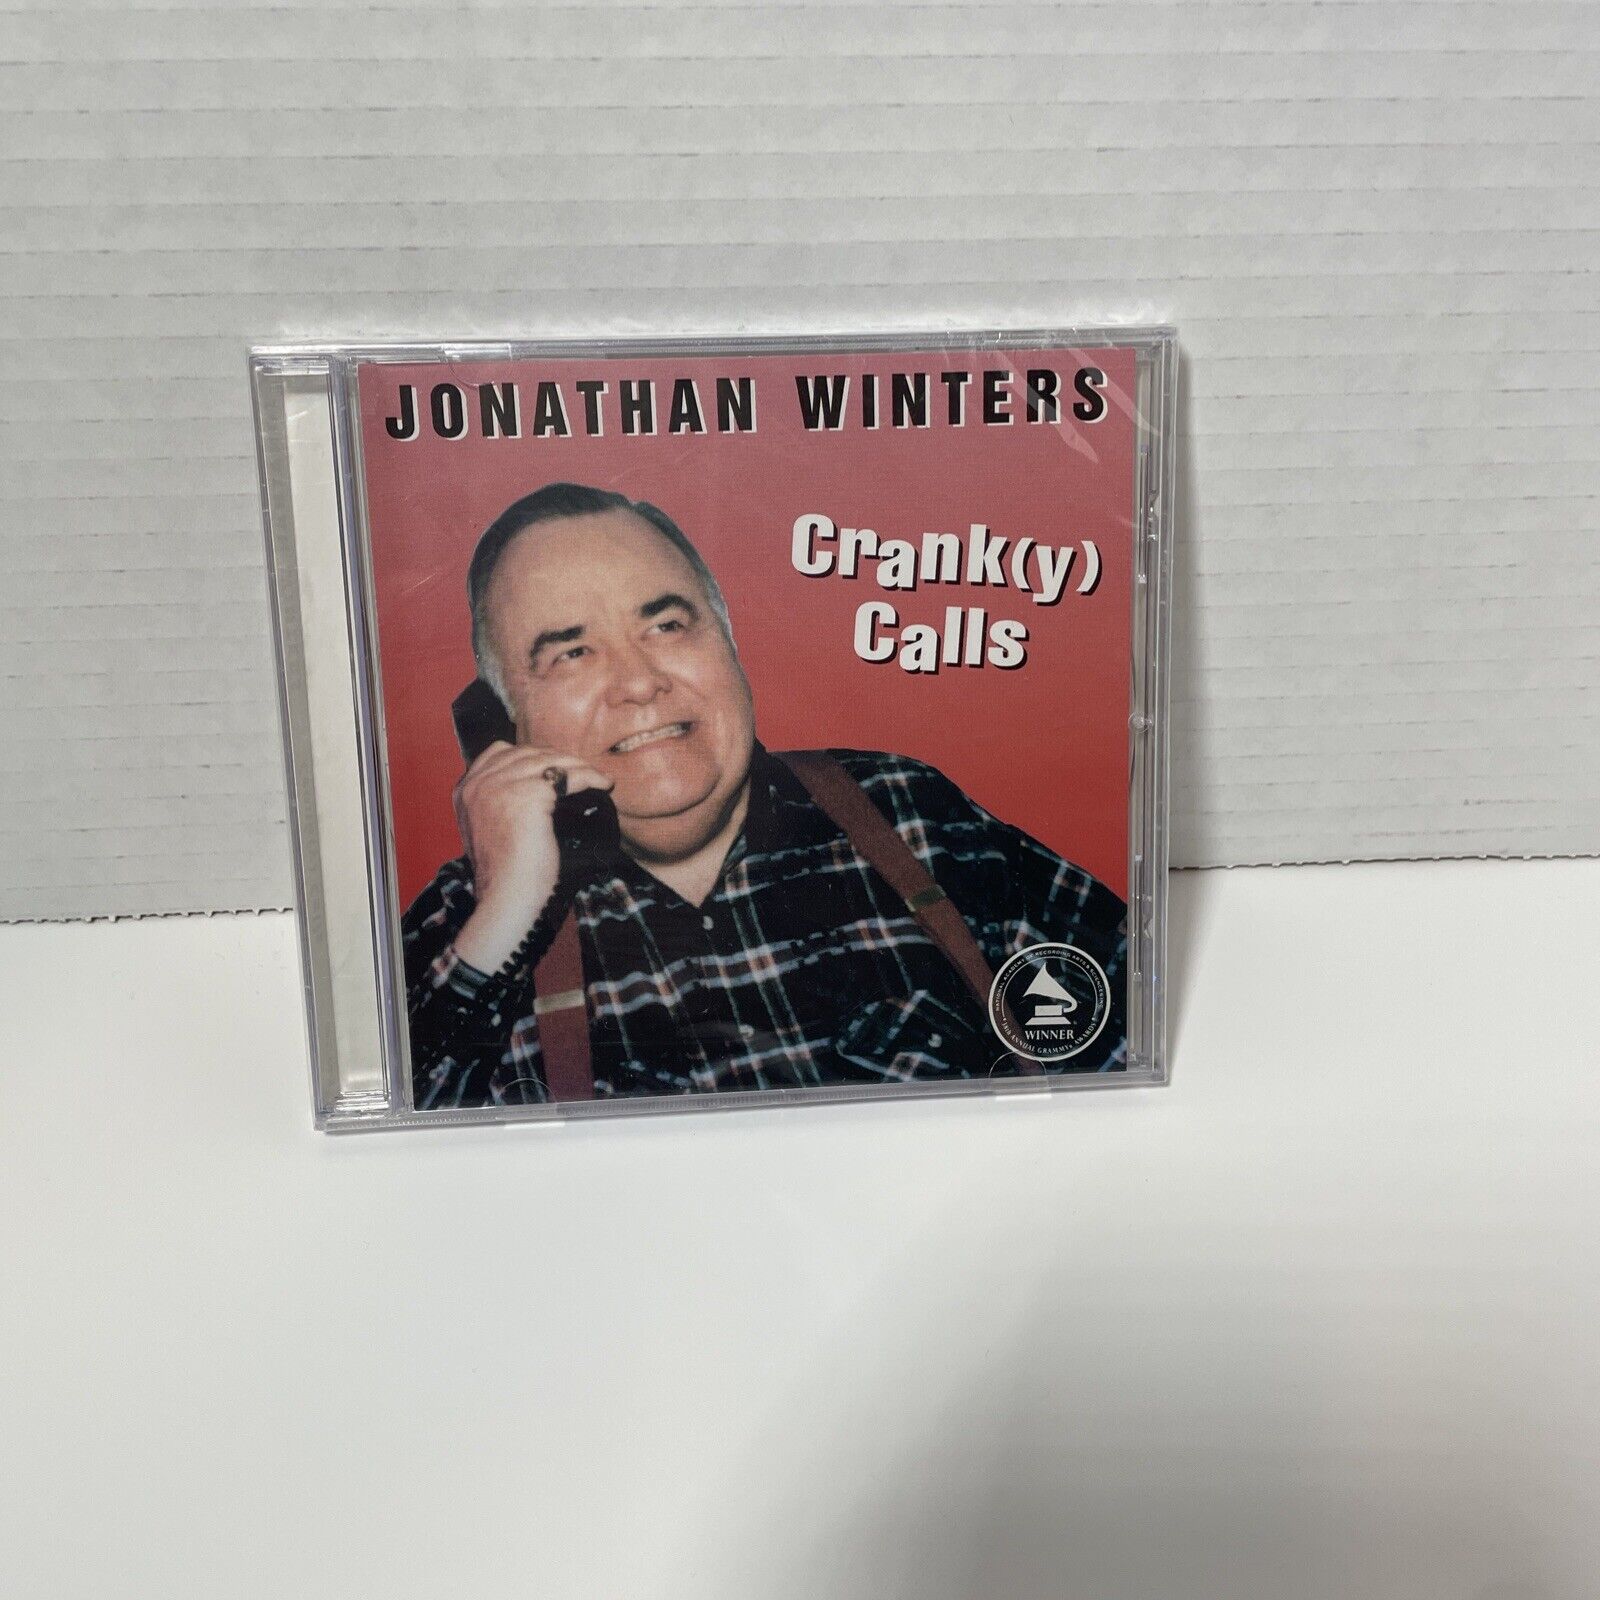 Crank(y) Calls by Winters, Jonathan (CD, 2000)